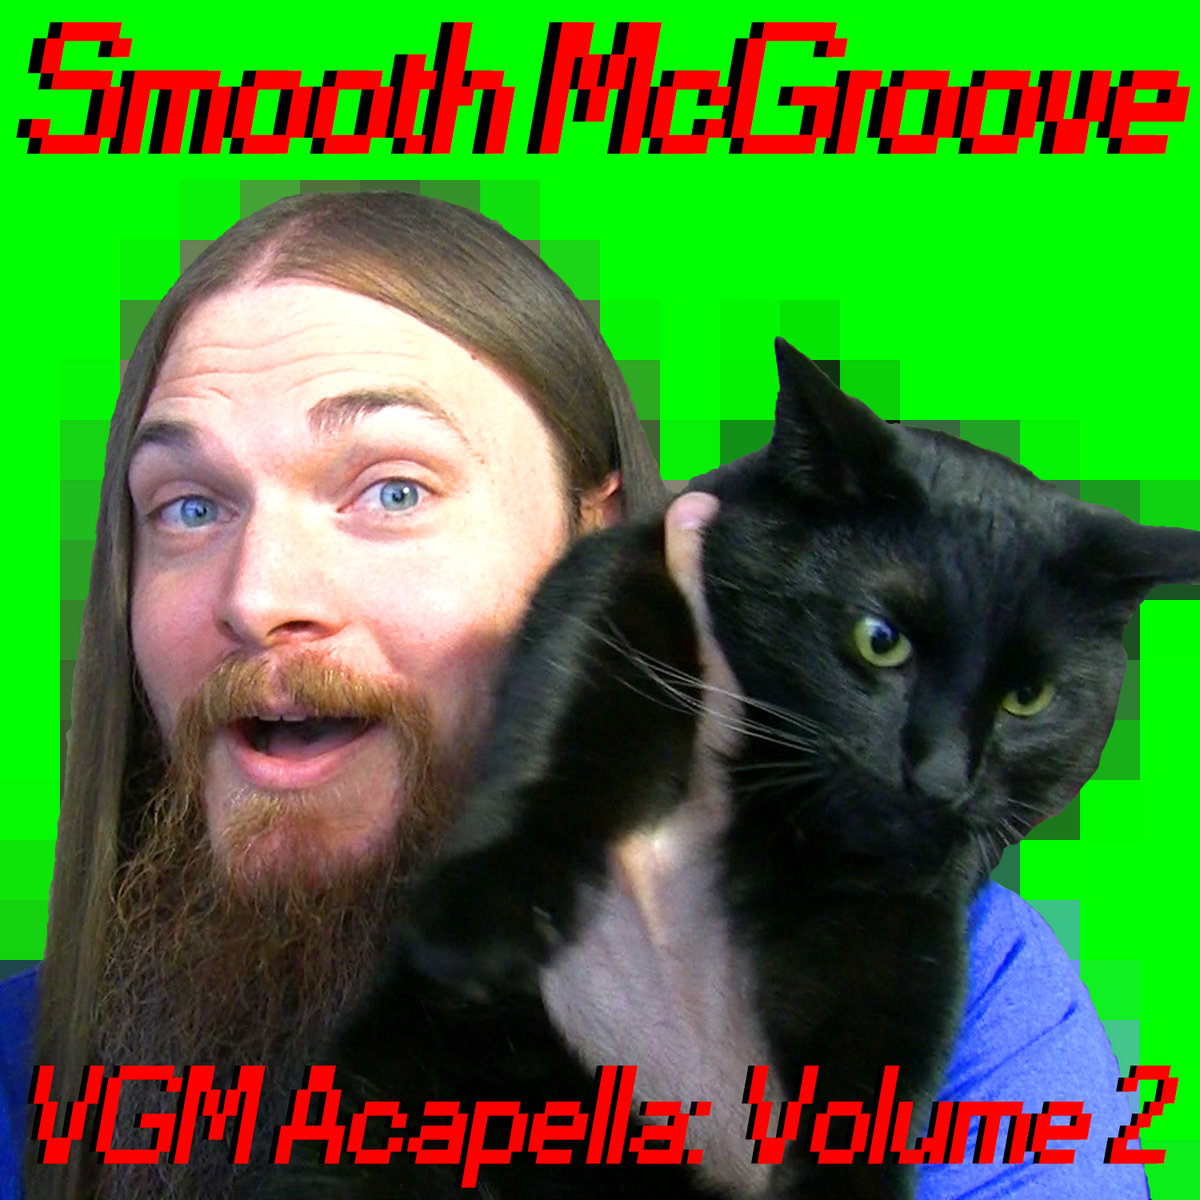 Smooth McGroove: VGM Acapella - Volume 2